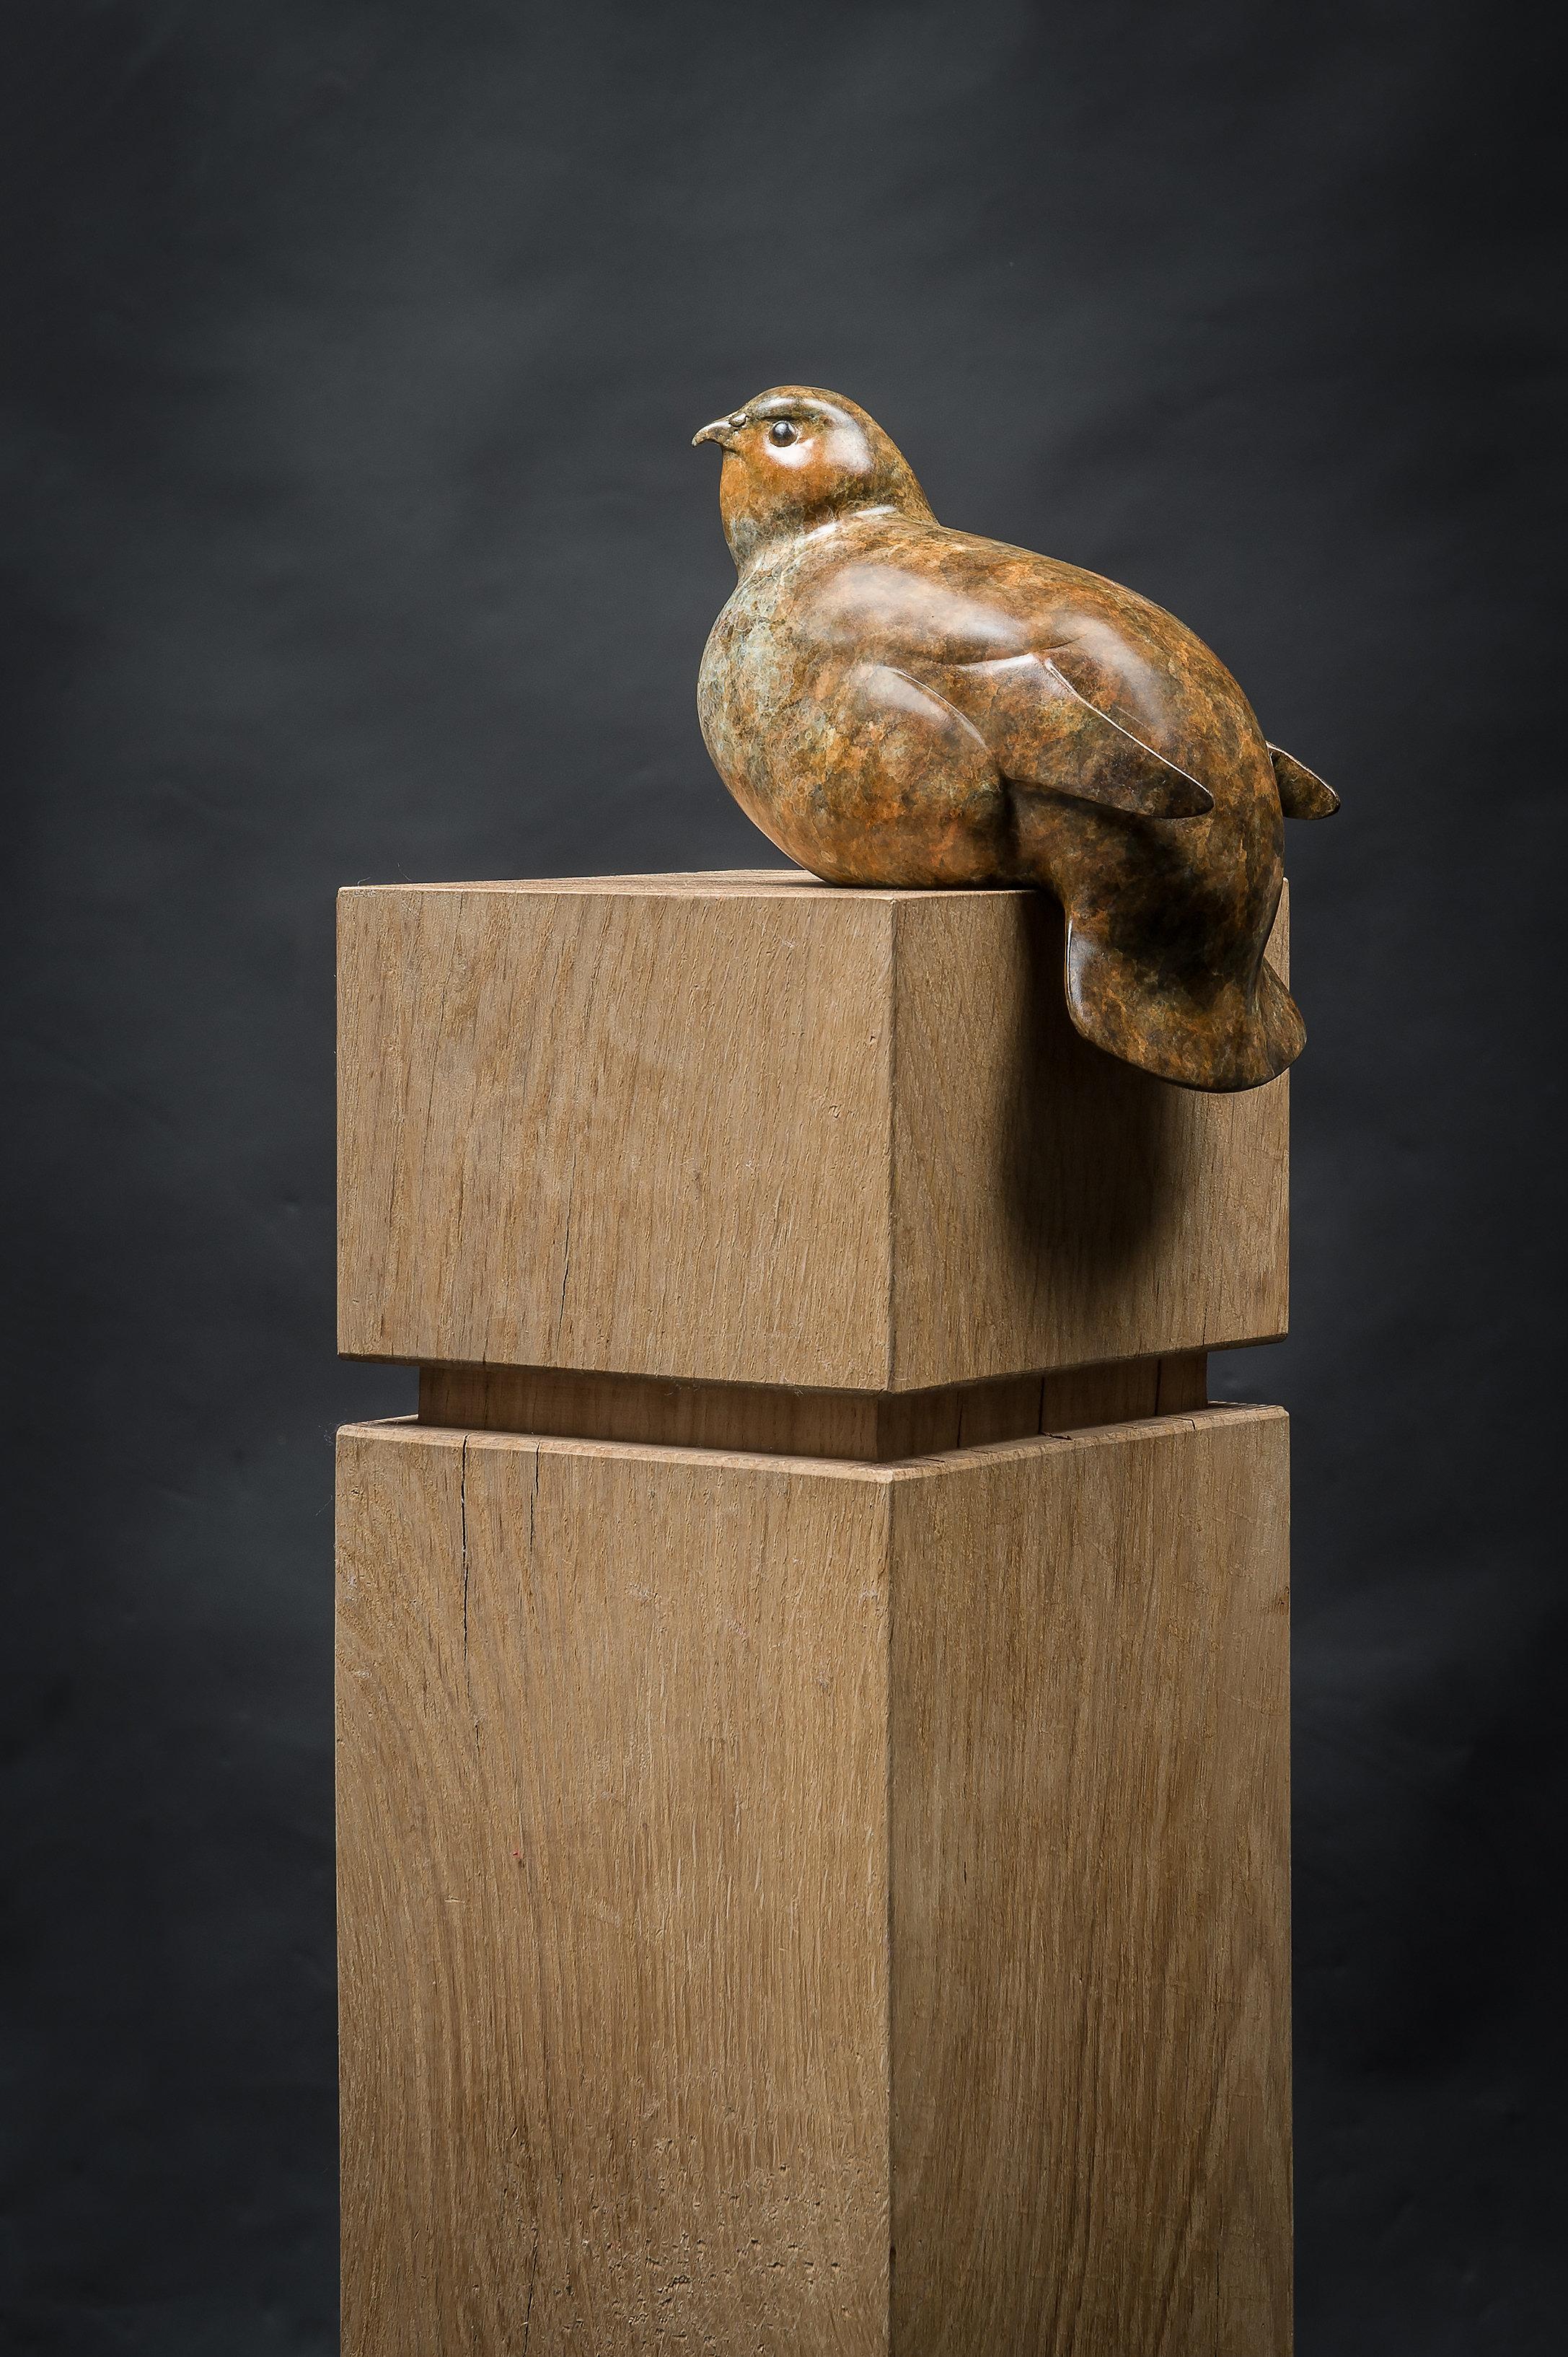 return the bird sculptures to their perches